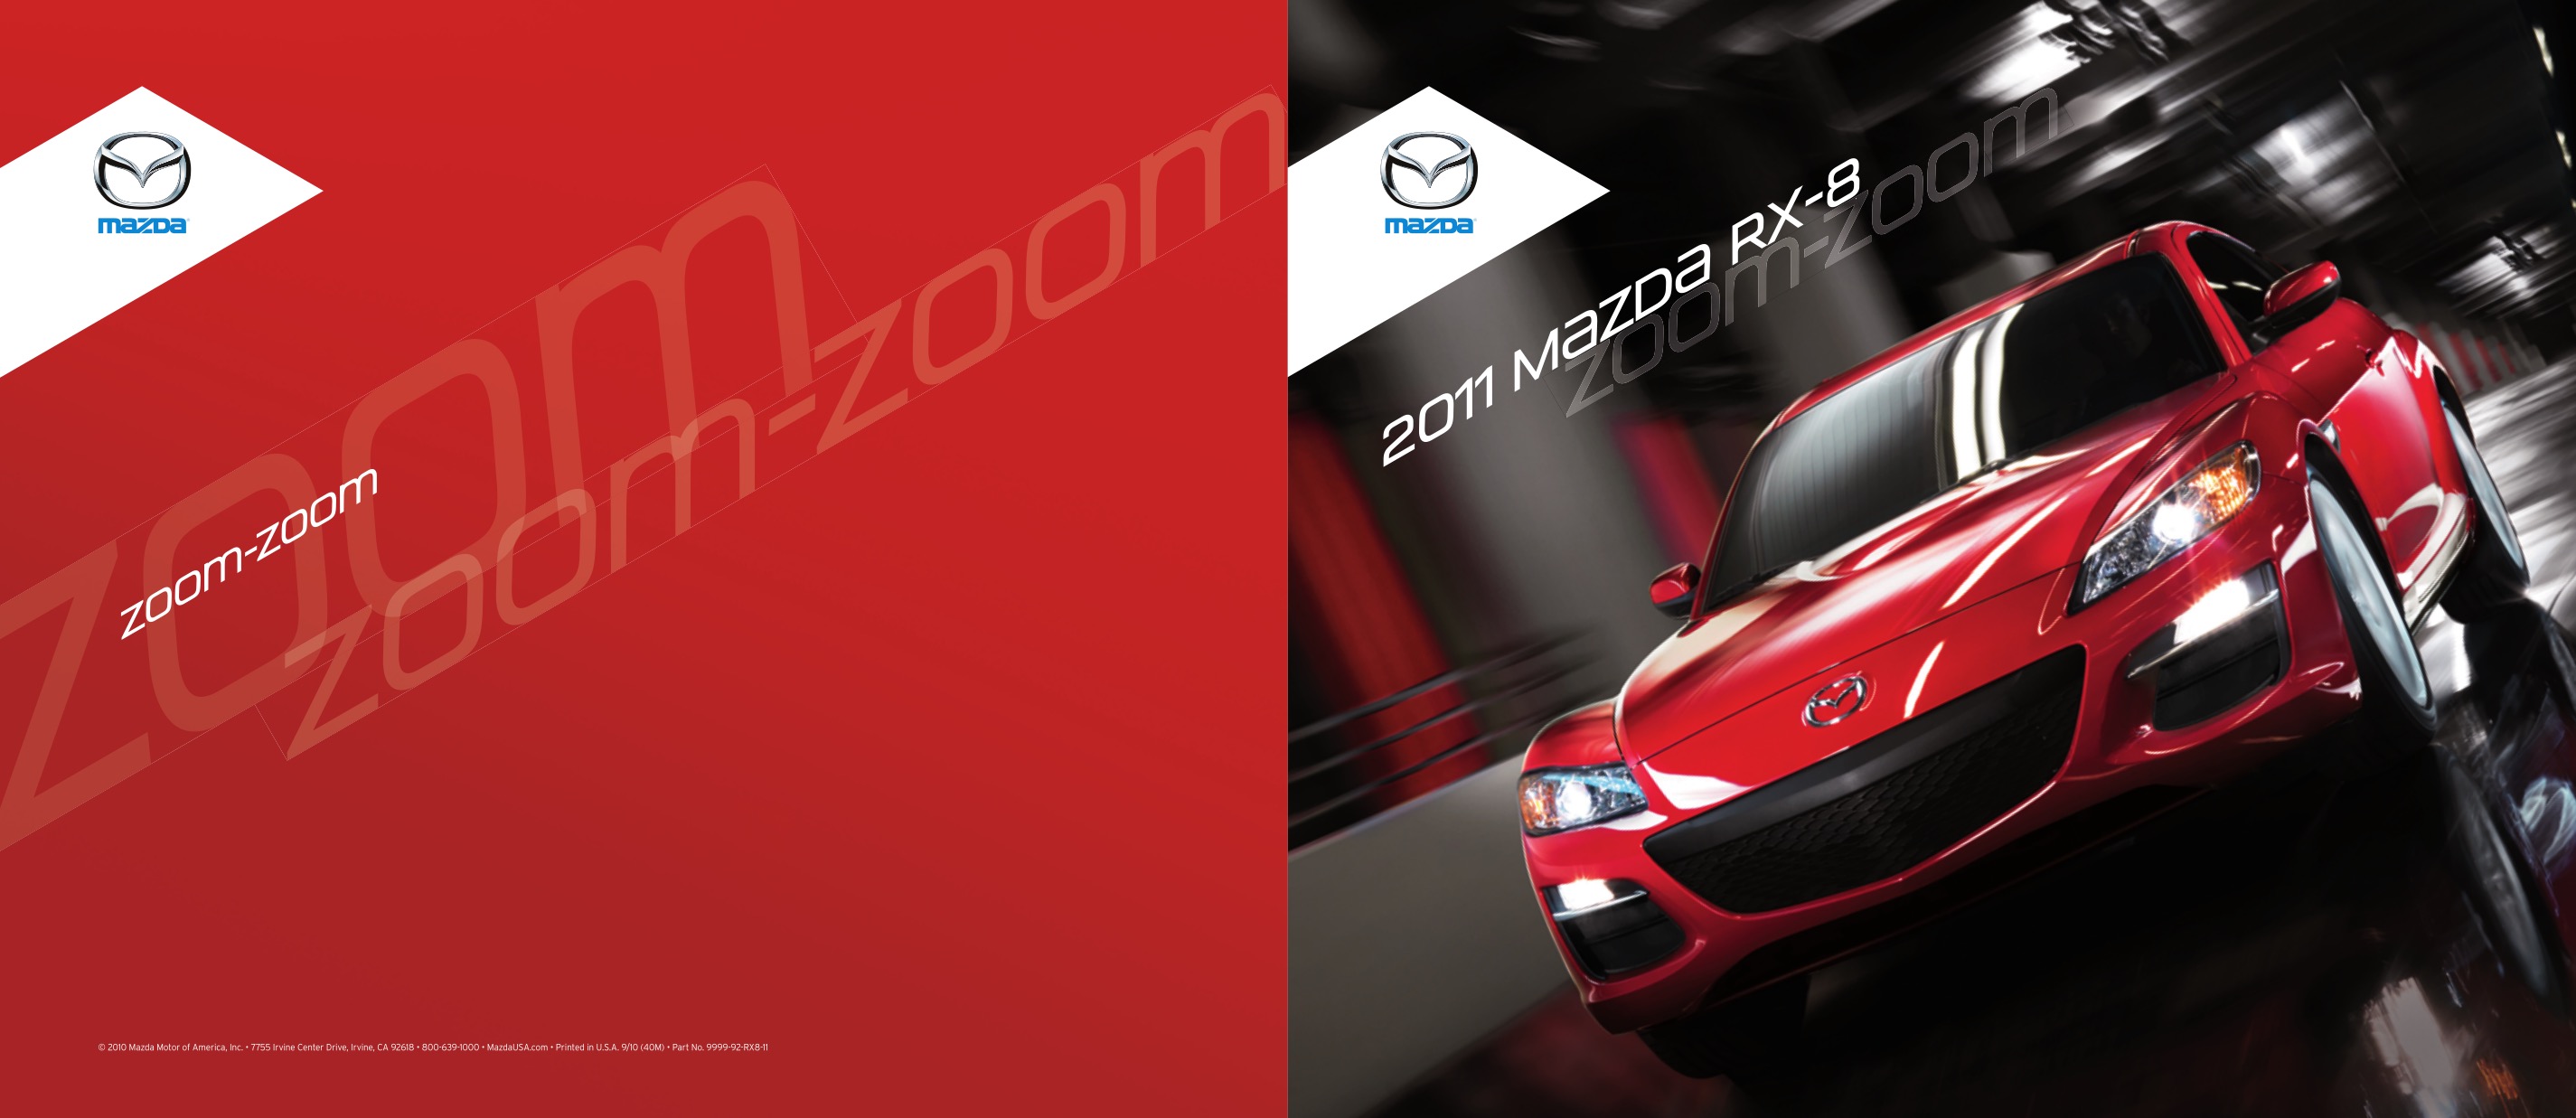 2011 Mazda RX-8 Brochure